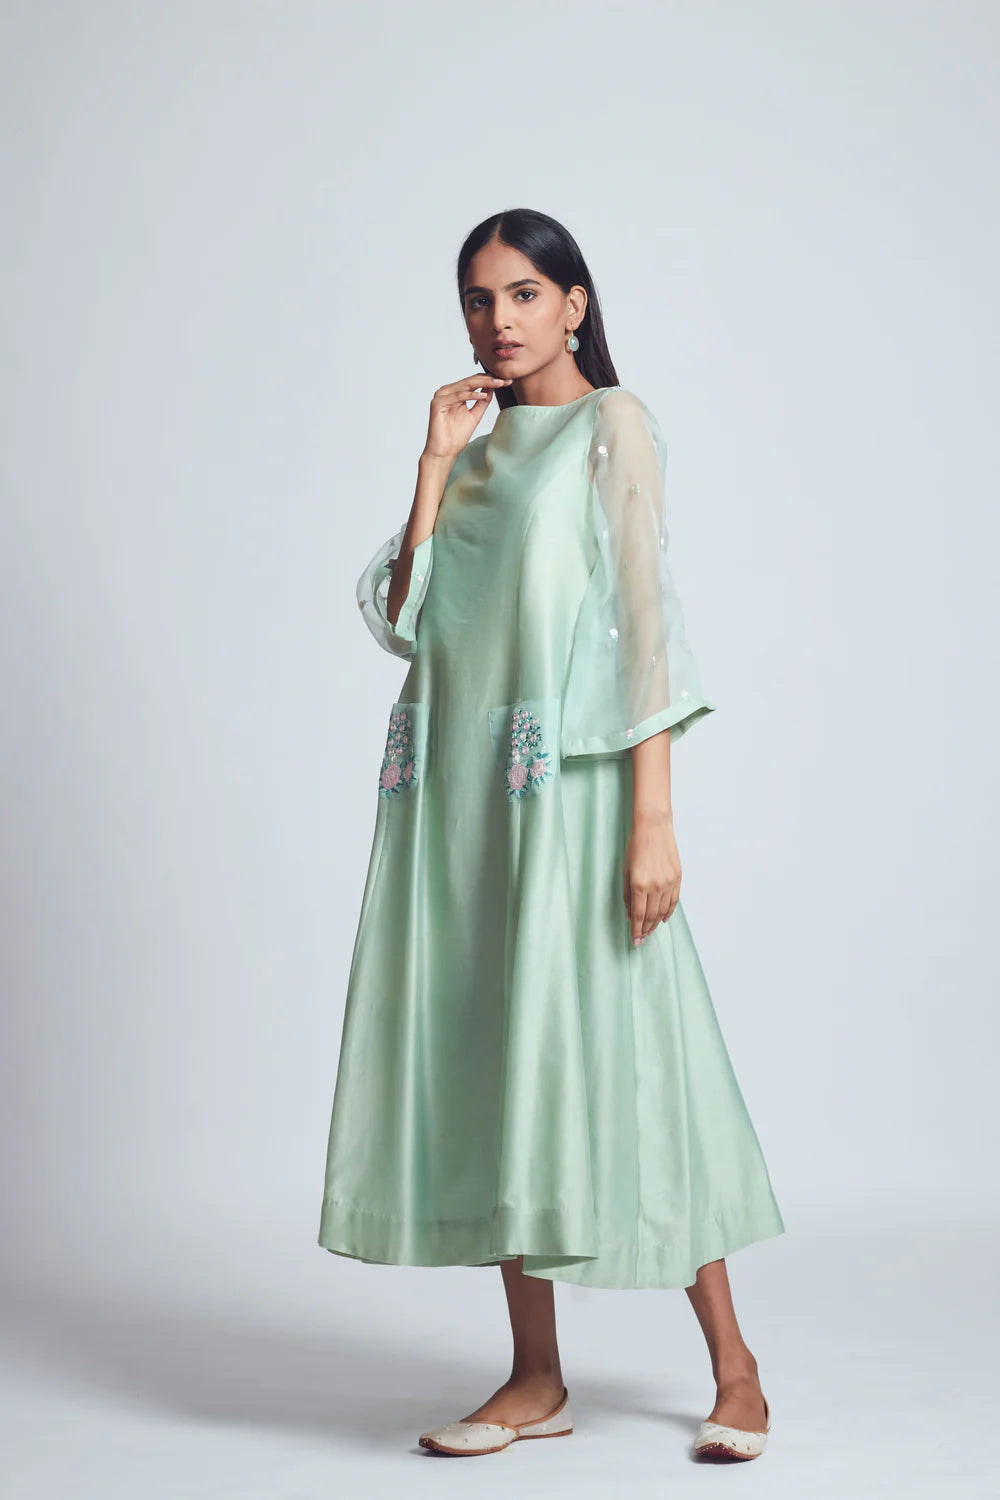 Aysa-Sage Green Princess Cut Style Dress- Ready to Ship